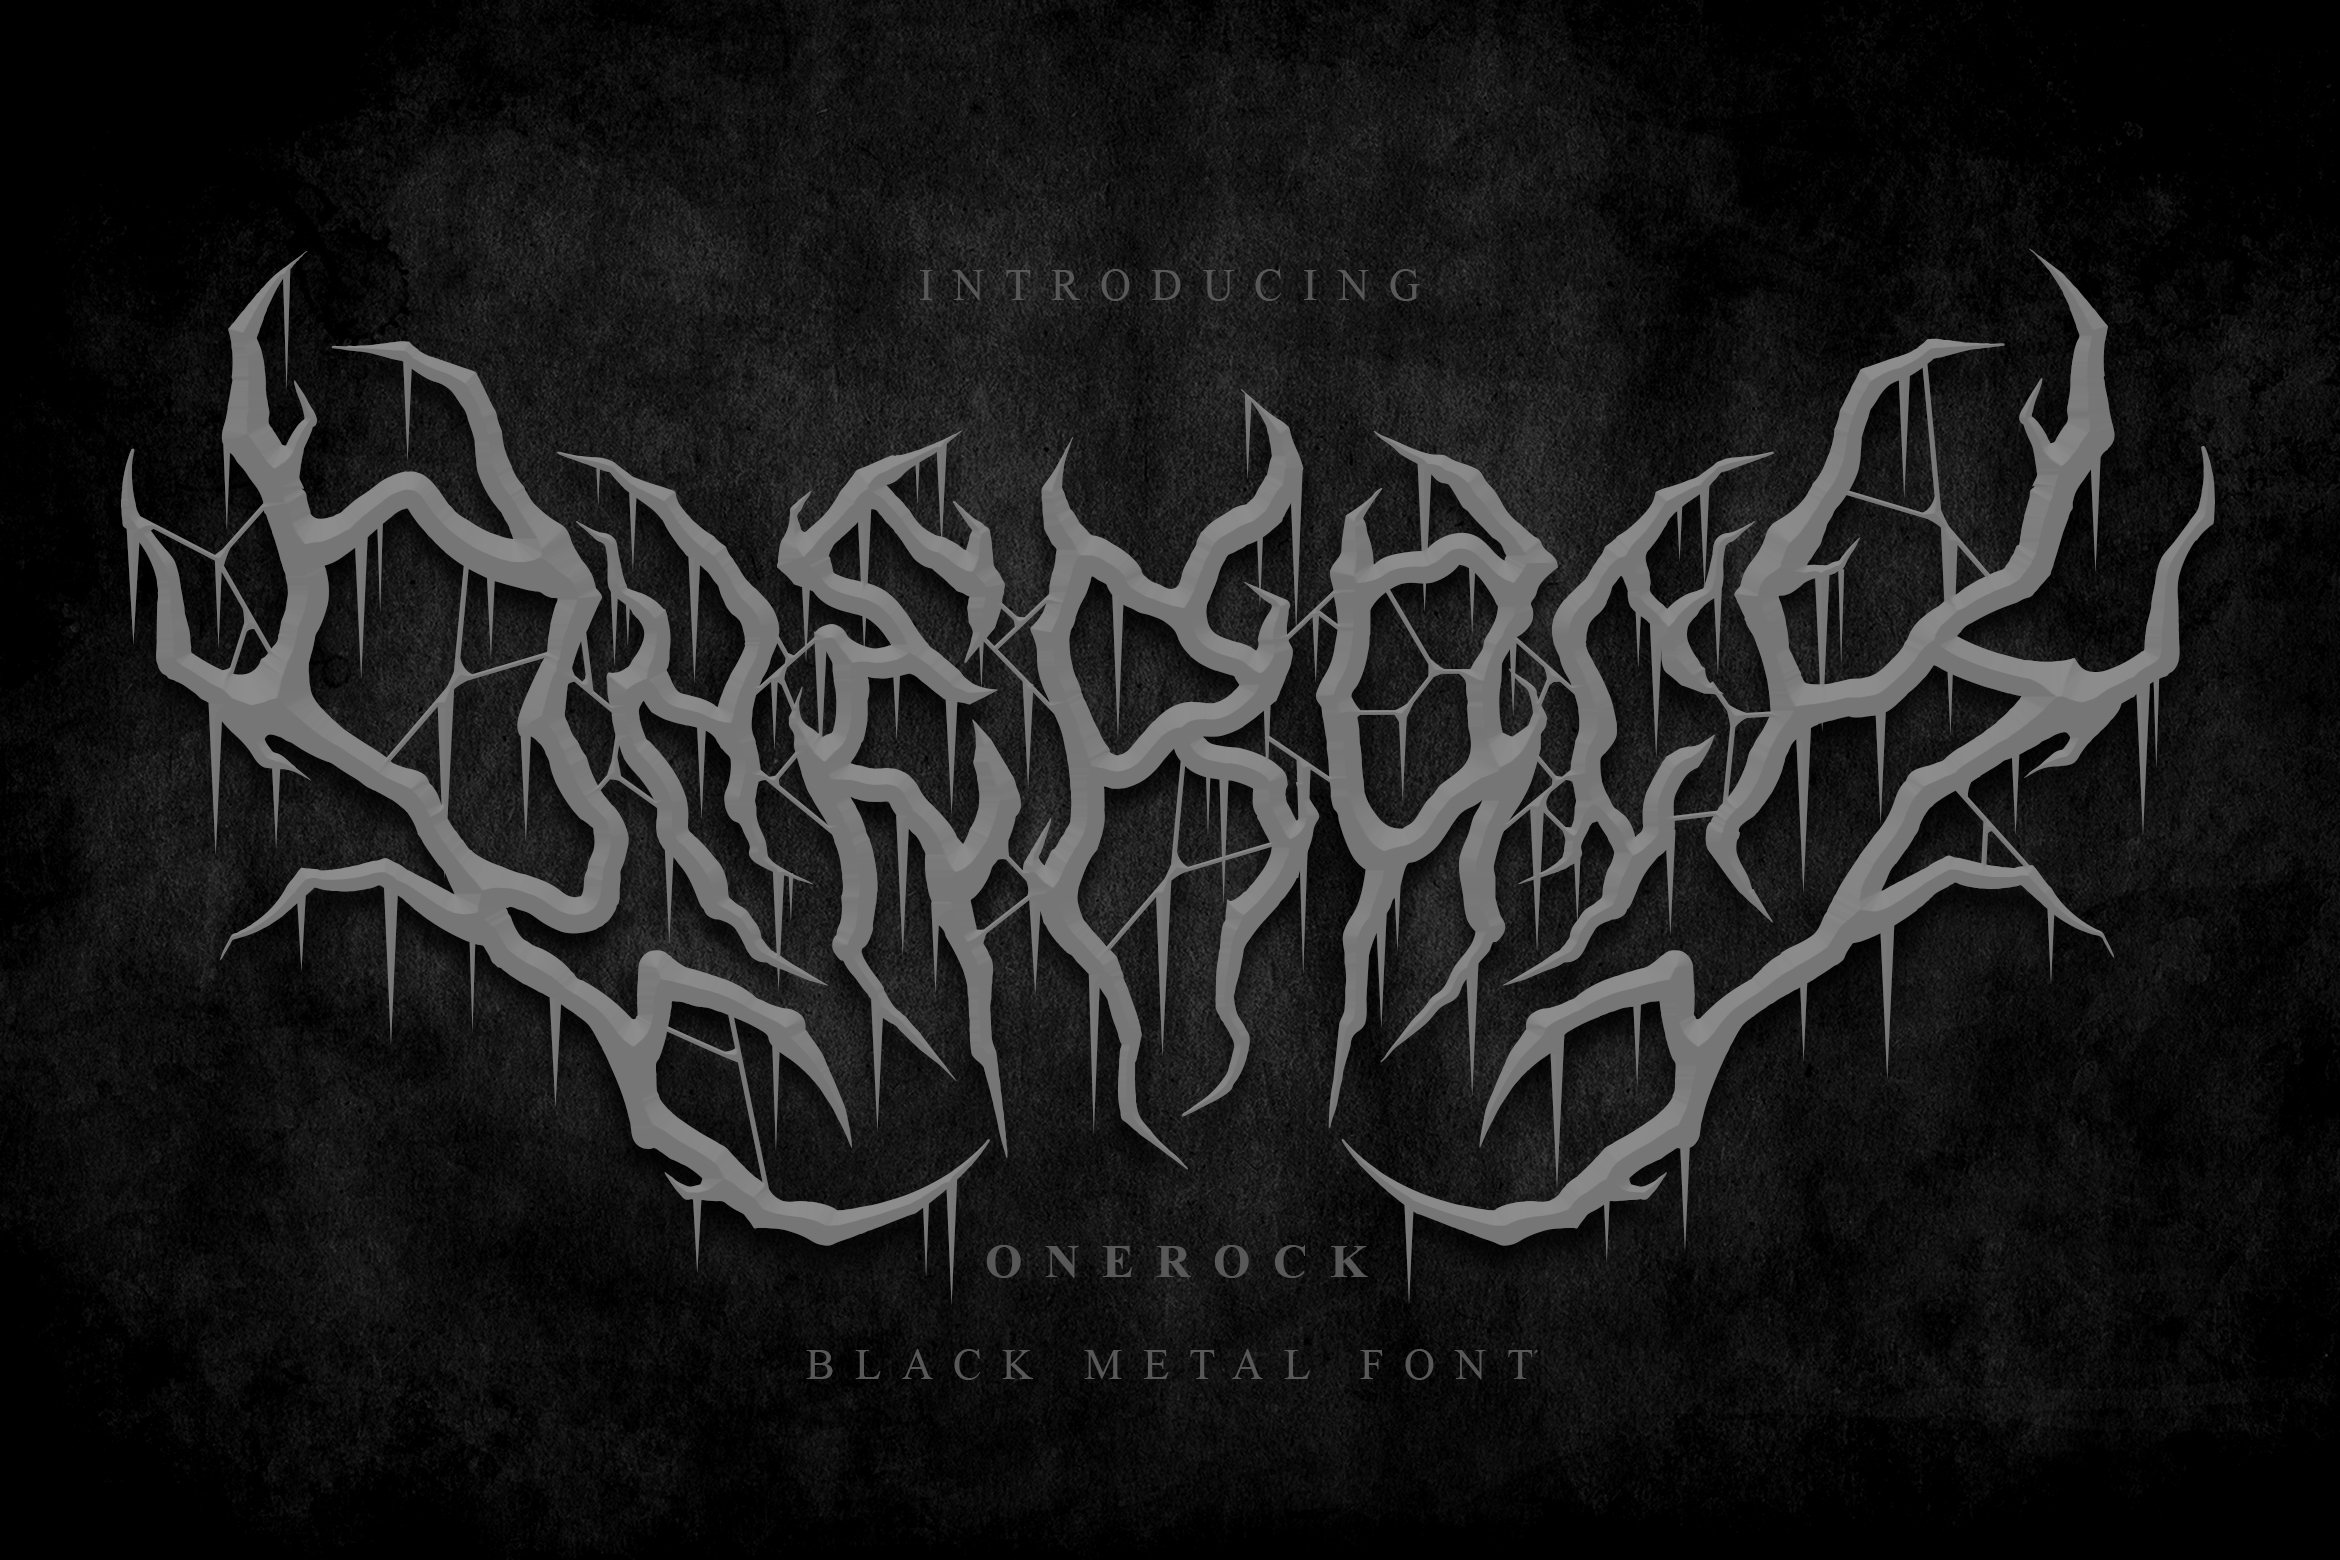 Onerock | Black Metal Font Vol.6 cover image.